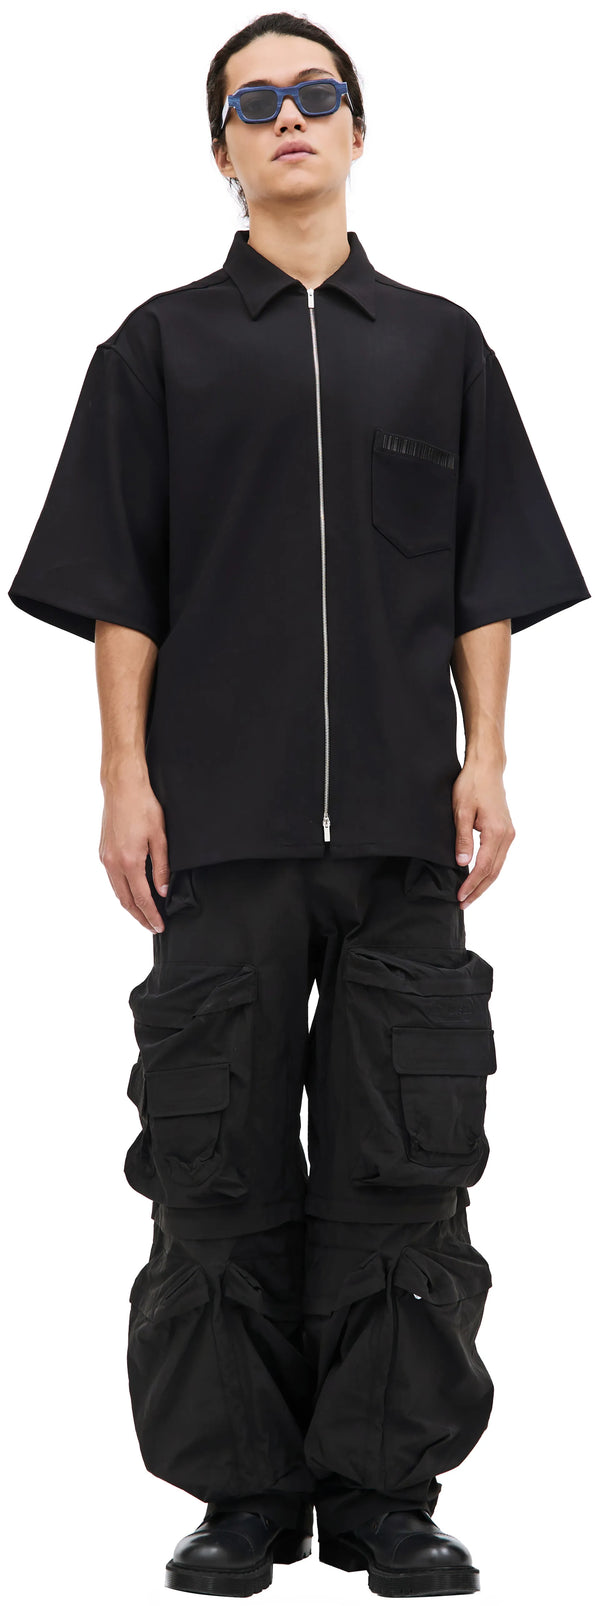 Zip-Up Short Sleeve Shirt (Black)